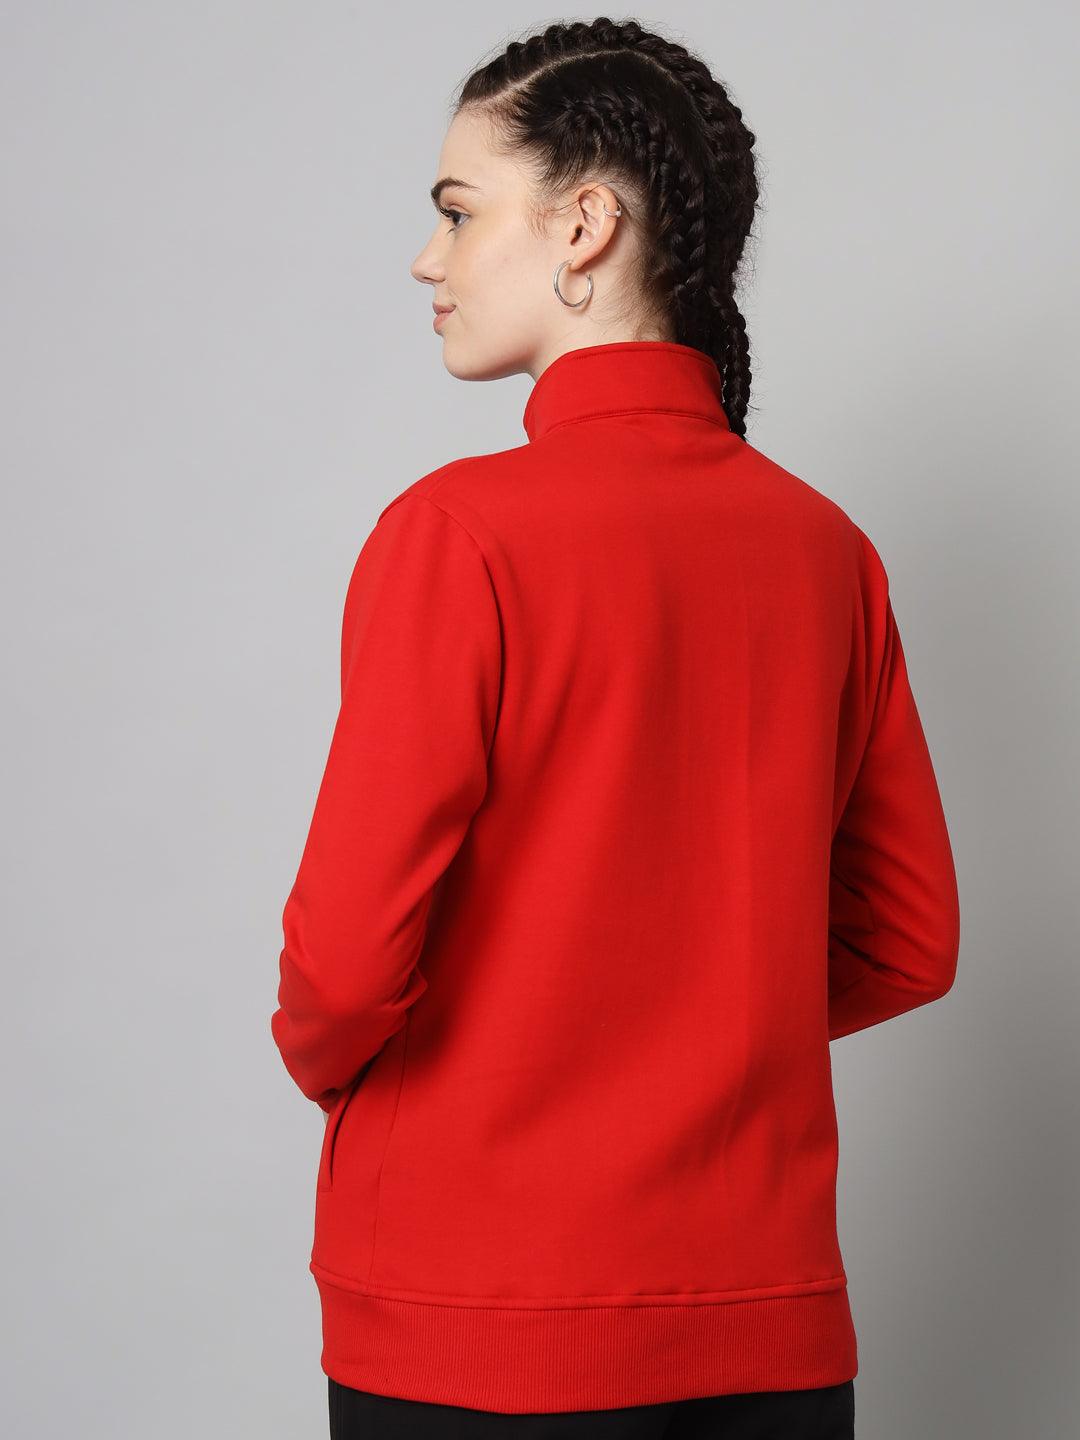 Griffel Women’s Cotton Fleece Full Sleeve Red Zipper Sweatshirt - griffel